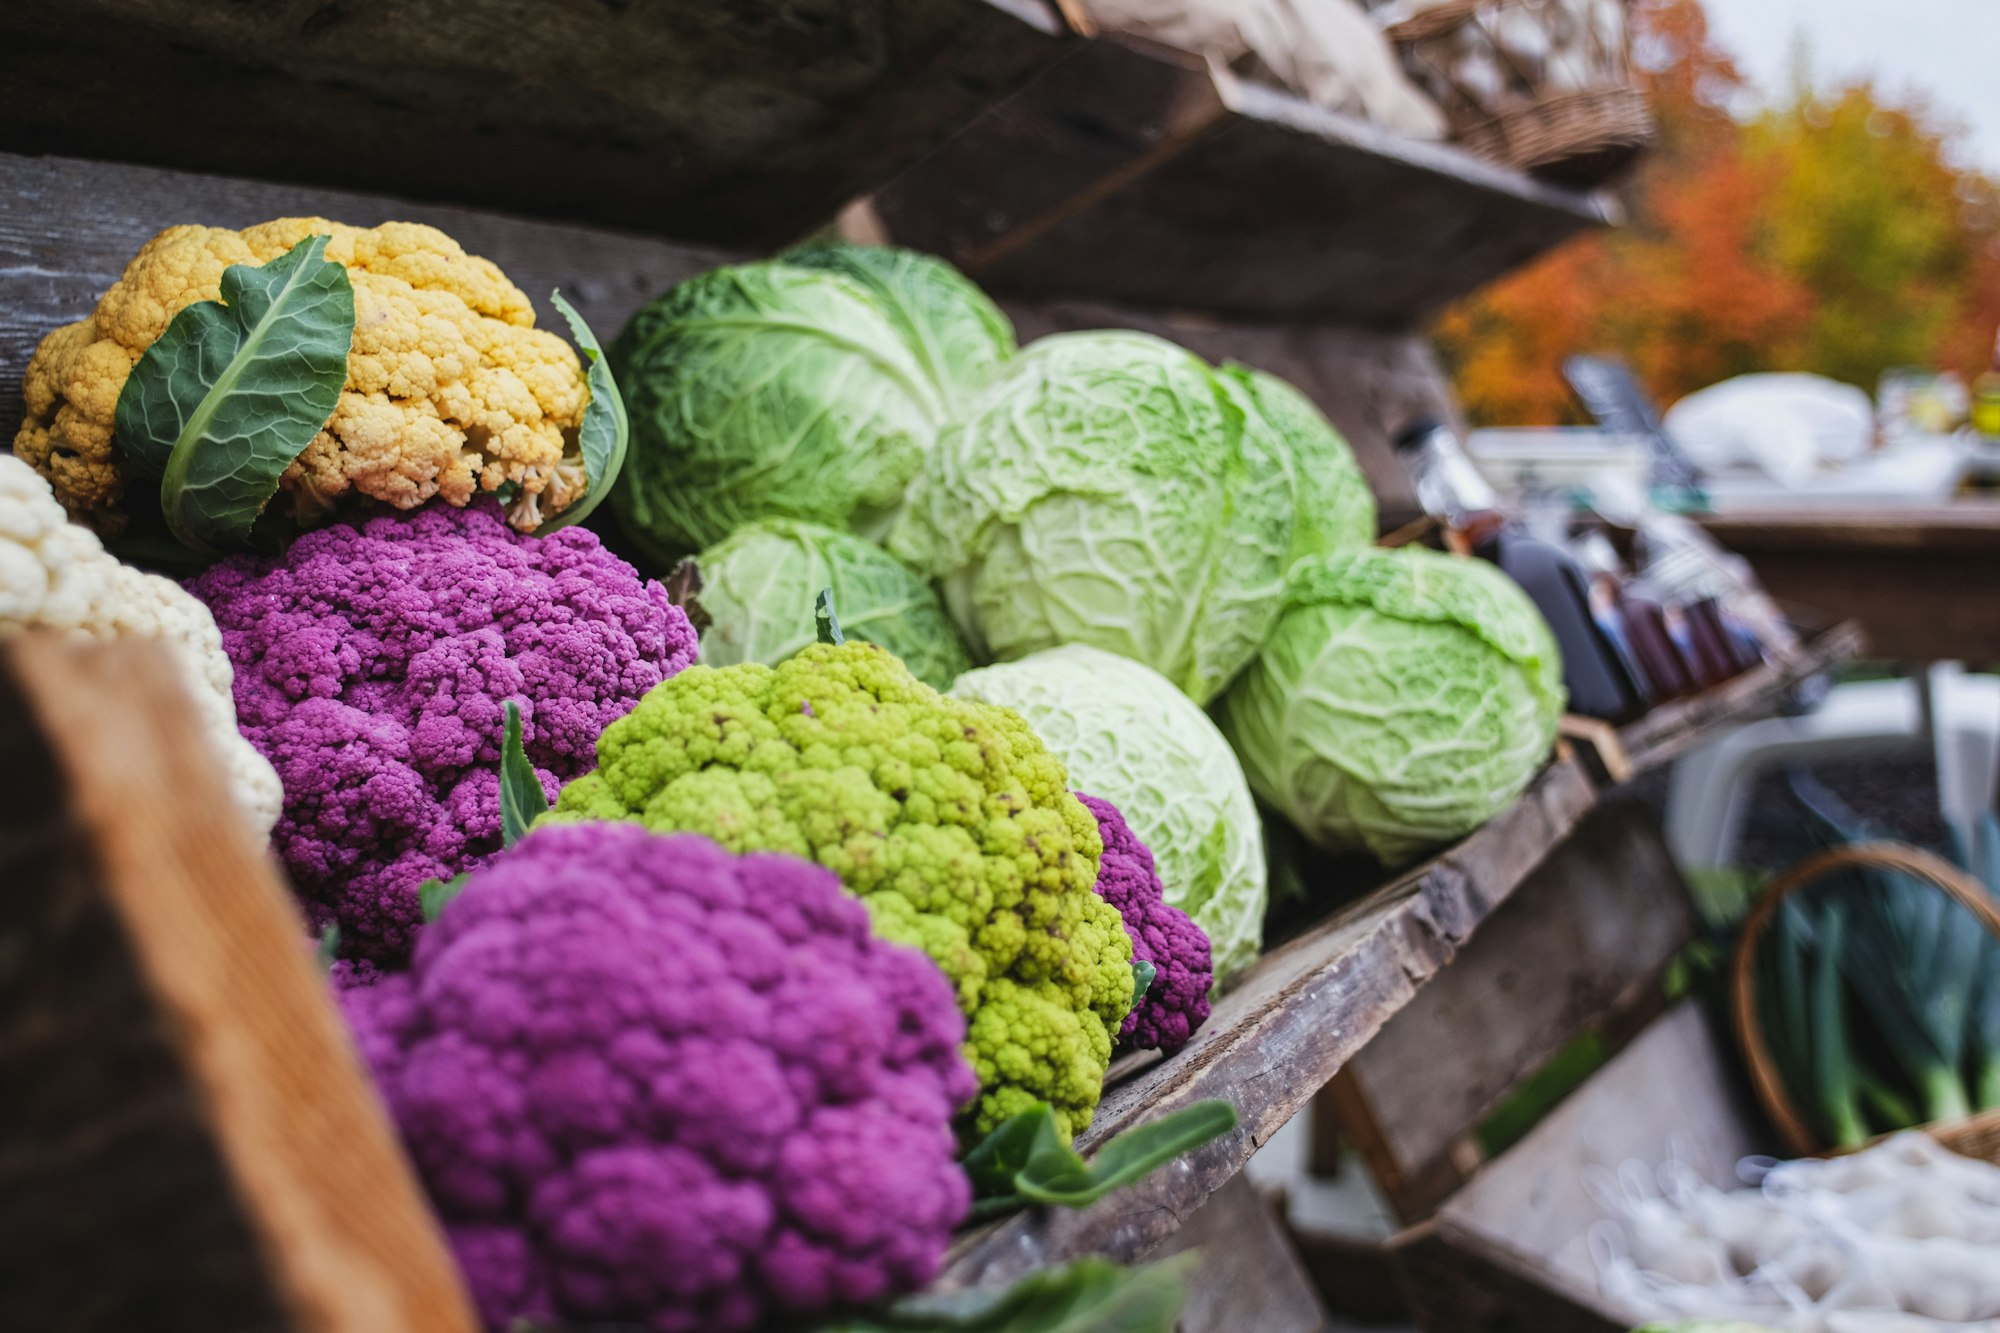 Cauliflower and cabbage display